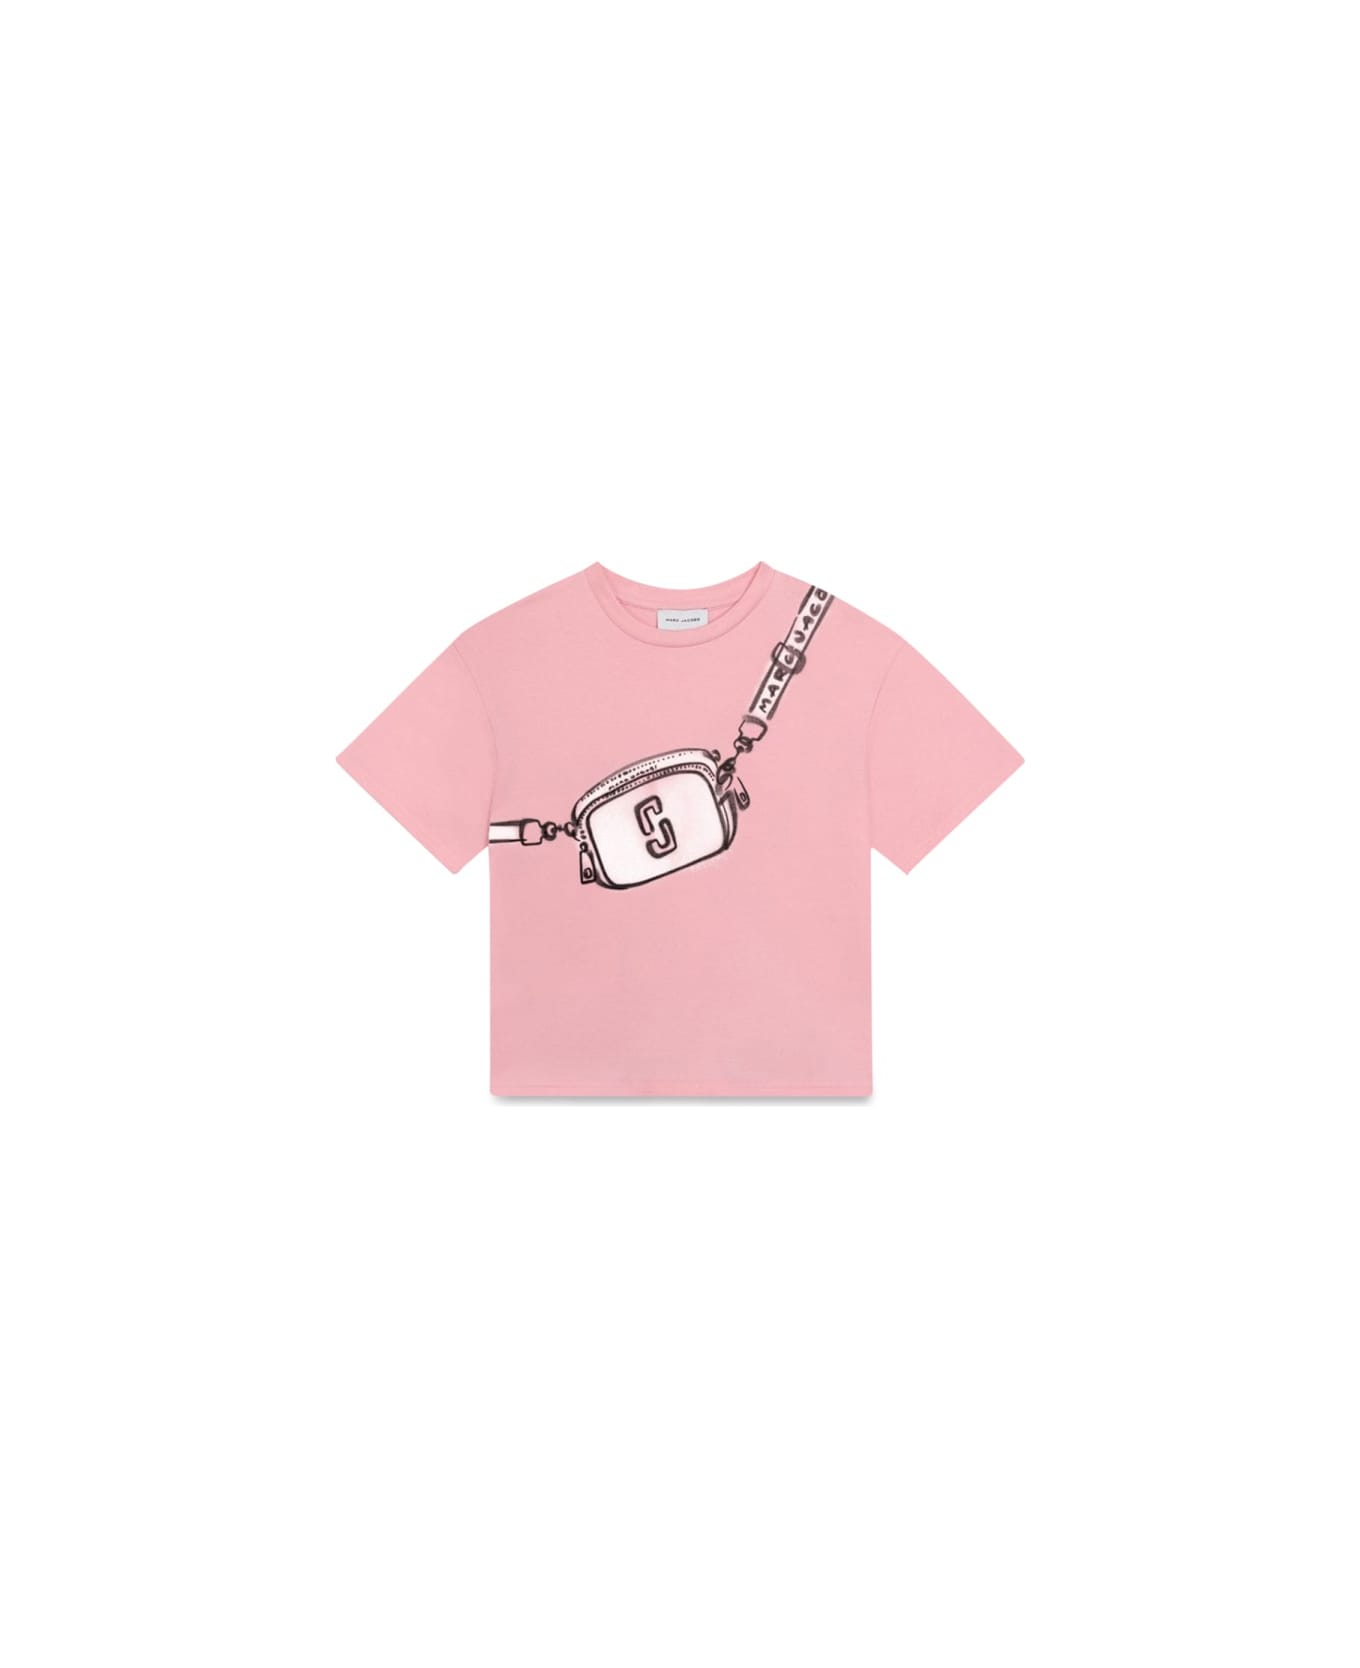 Marc Jacobs Tee Shirt - PINK